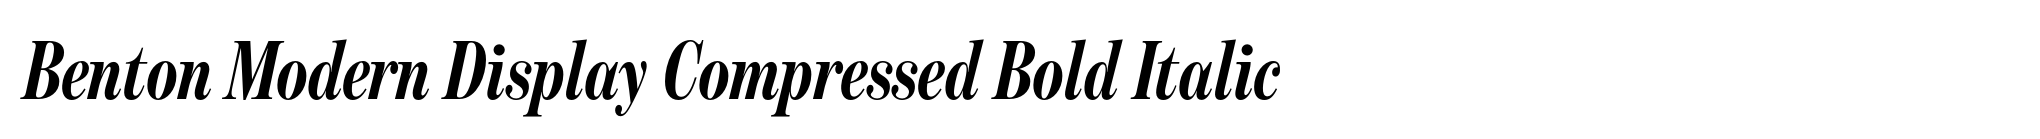 Benton Modern Display Compressed Bold Italic image